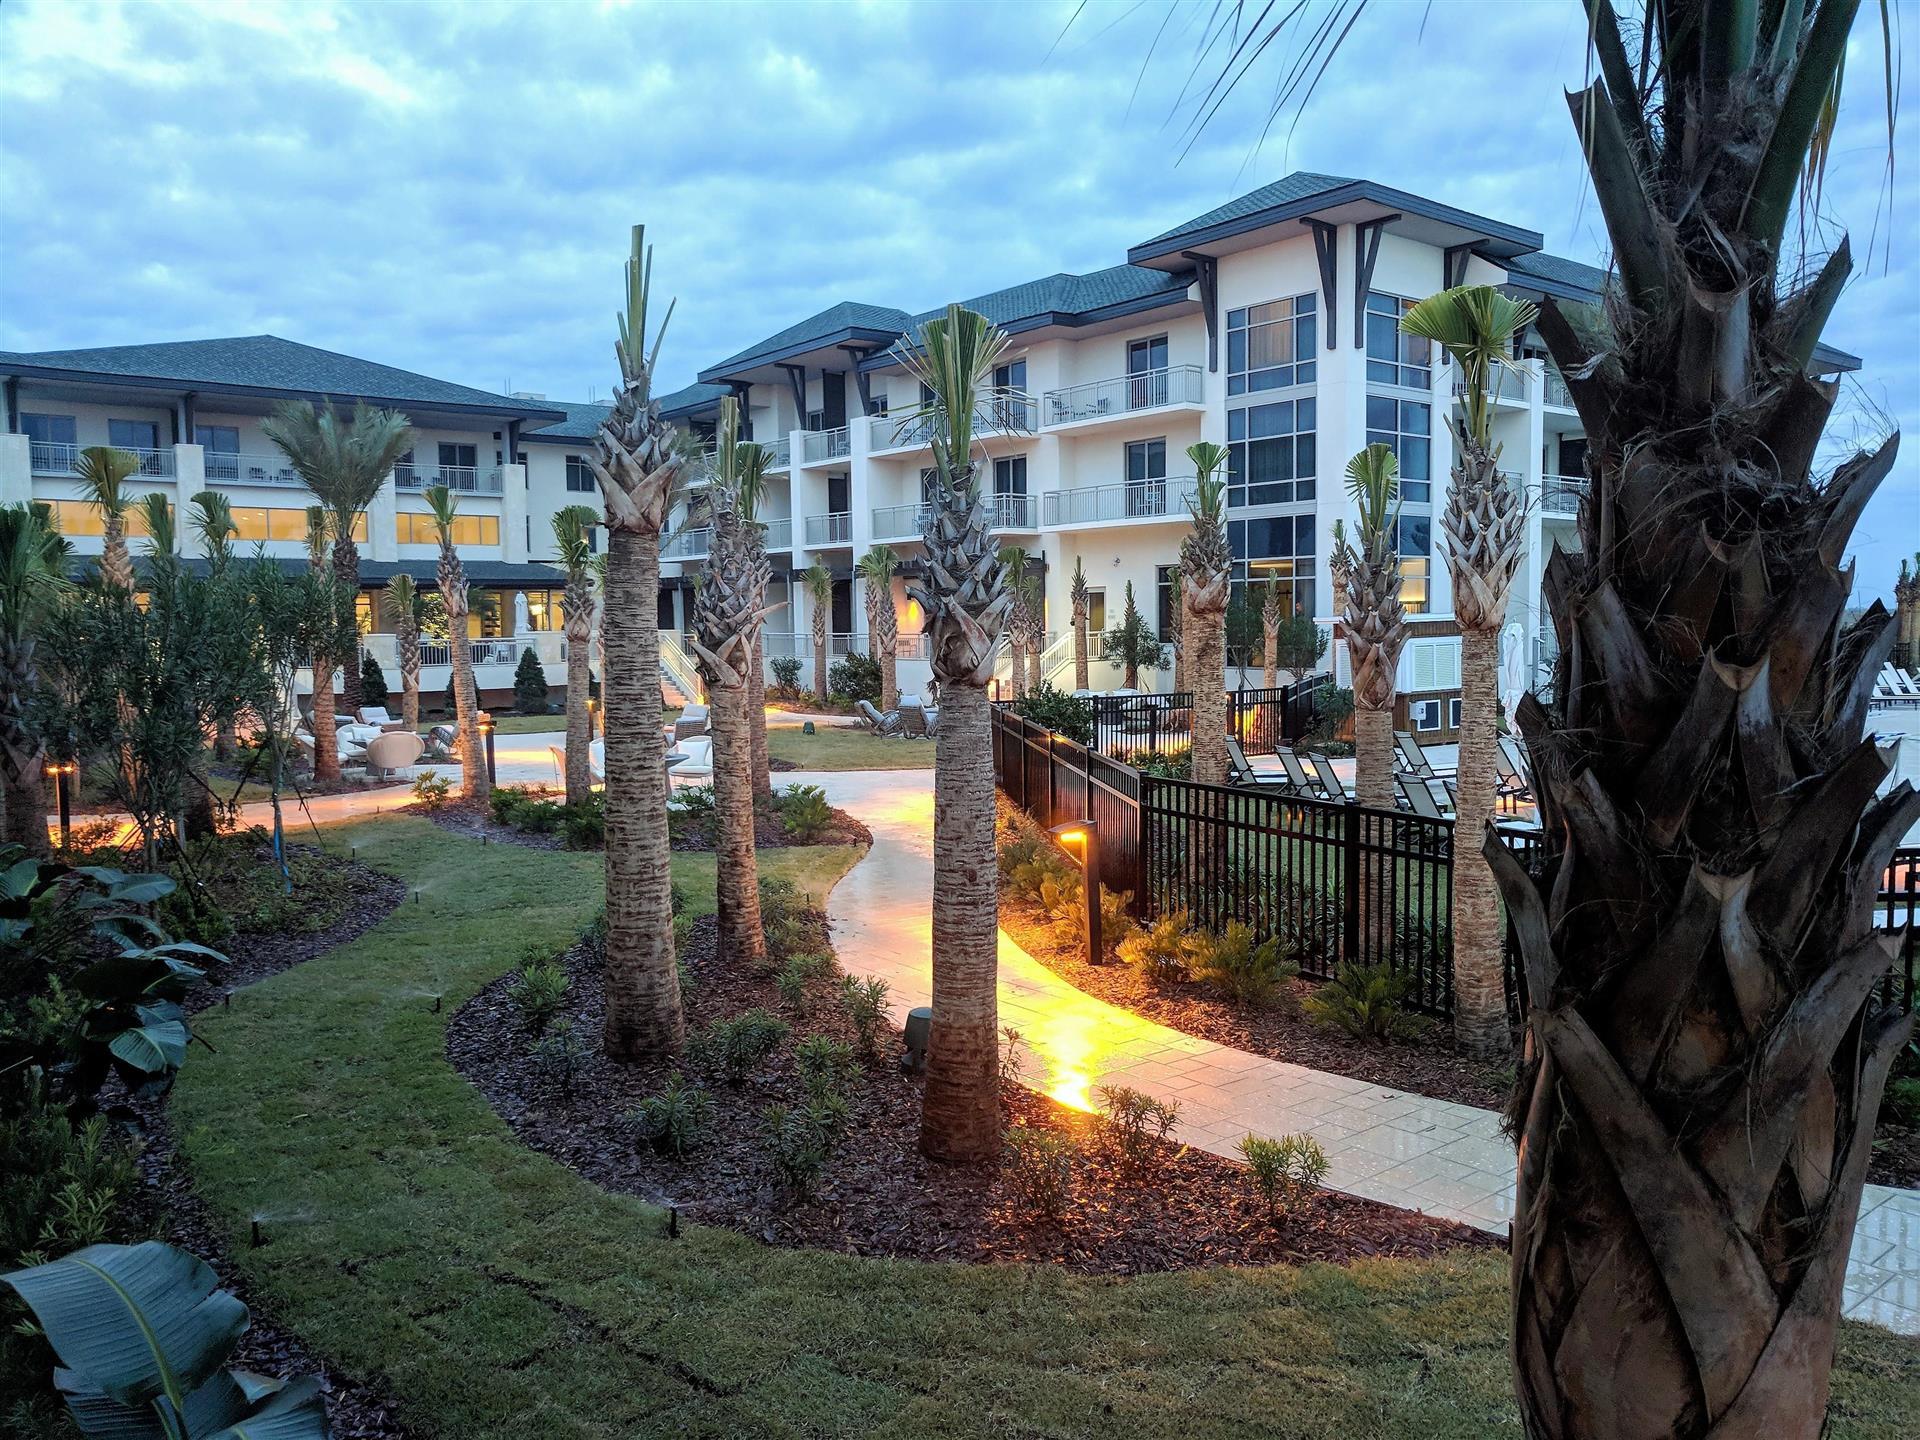 Embassy Suites by Hilton St Augustine Beach Oceanfront Resort in St. Augustine, FL